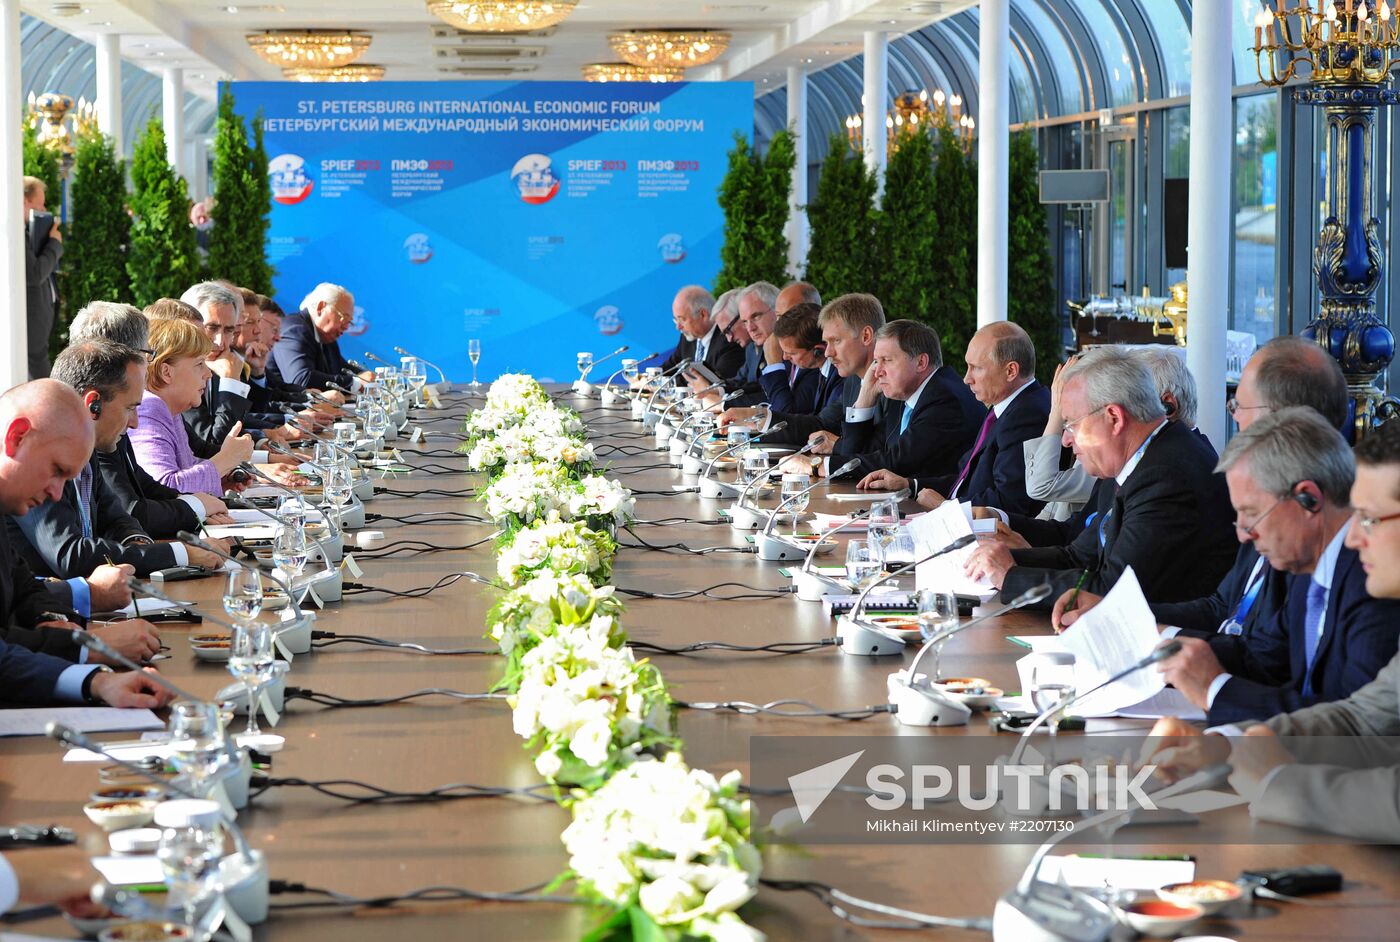 News conference of Vladimir Putin and Angela Merkel